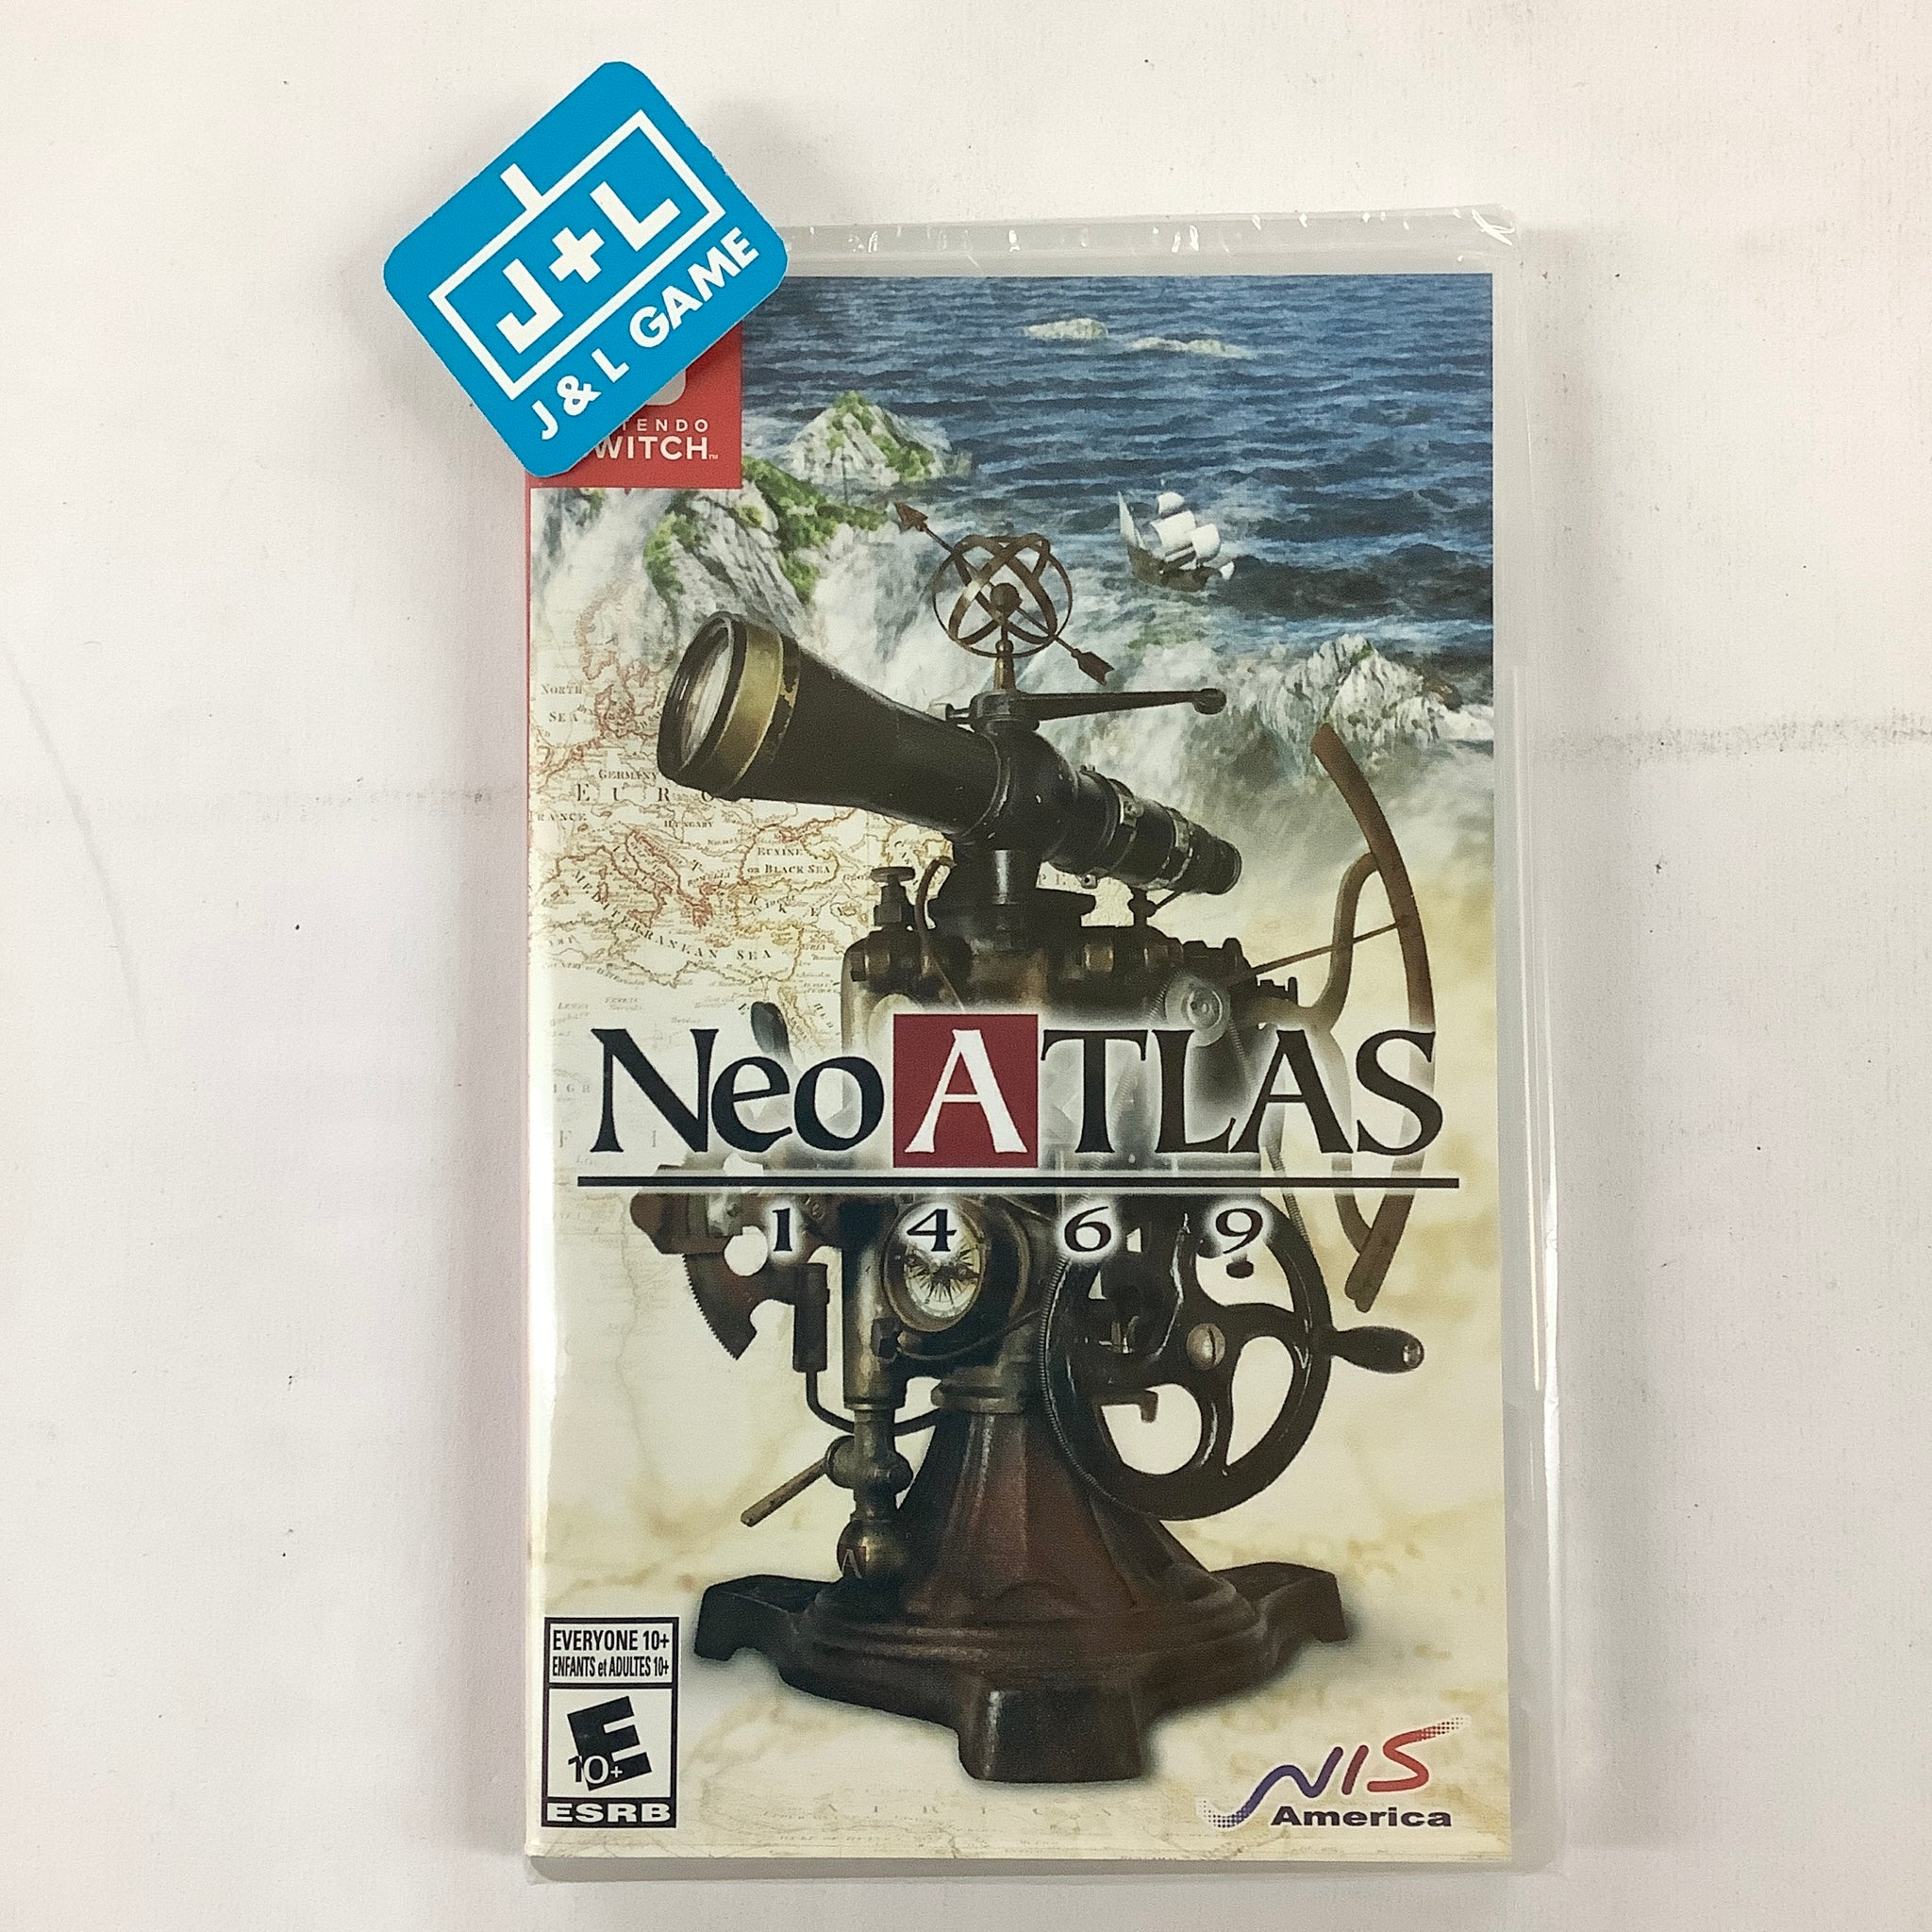 Neo Atlas 1469 - (NSW) Nintendo Switch Video Games NIS America   